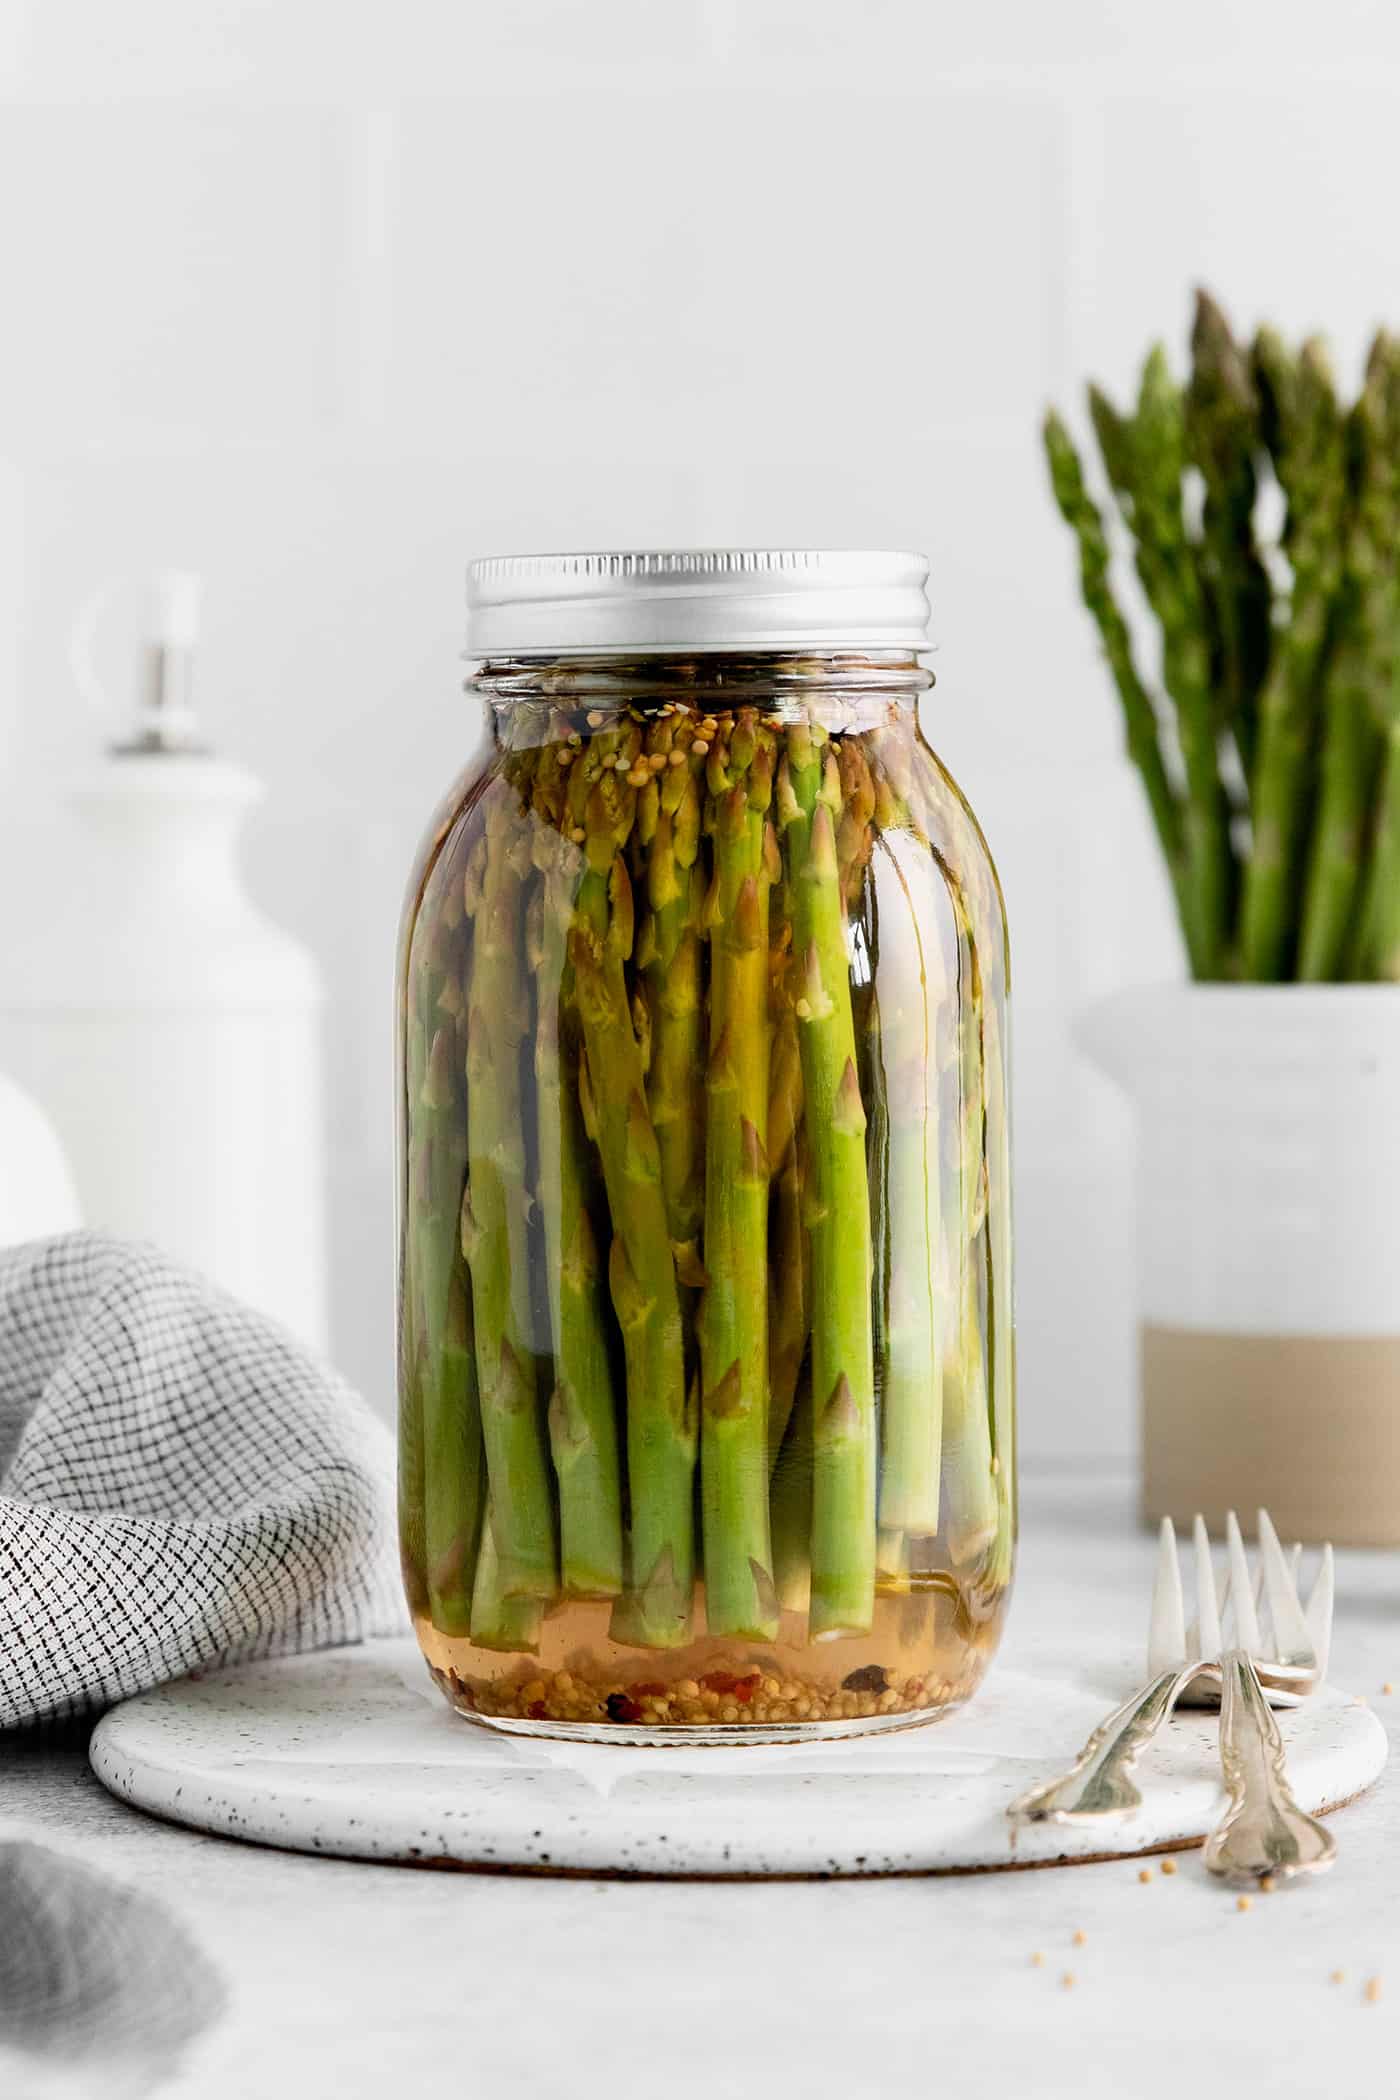 A jar of pickled asparagus